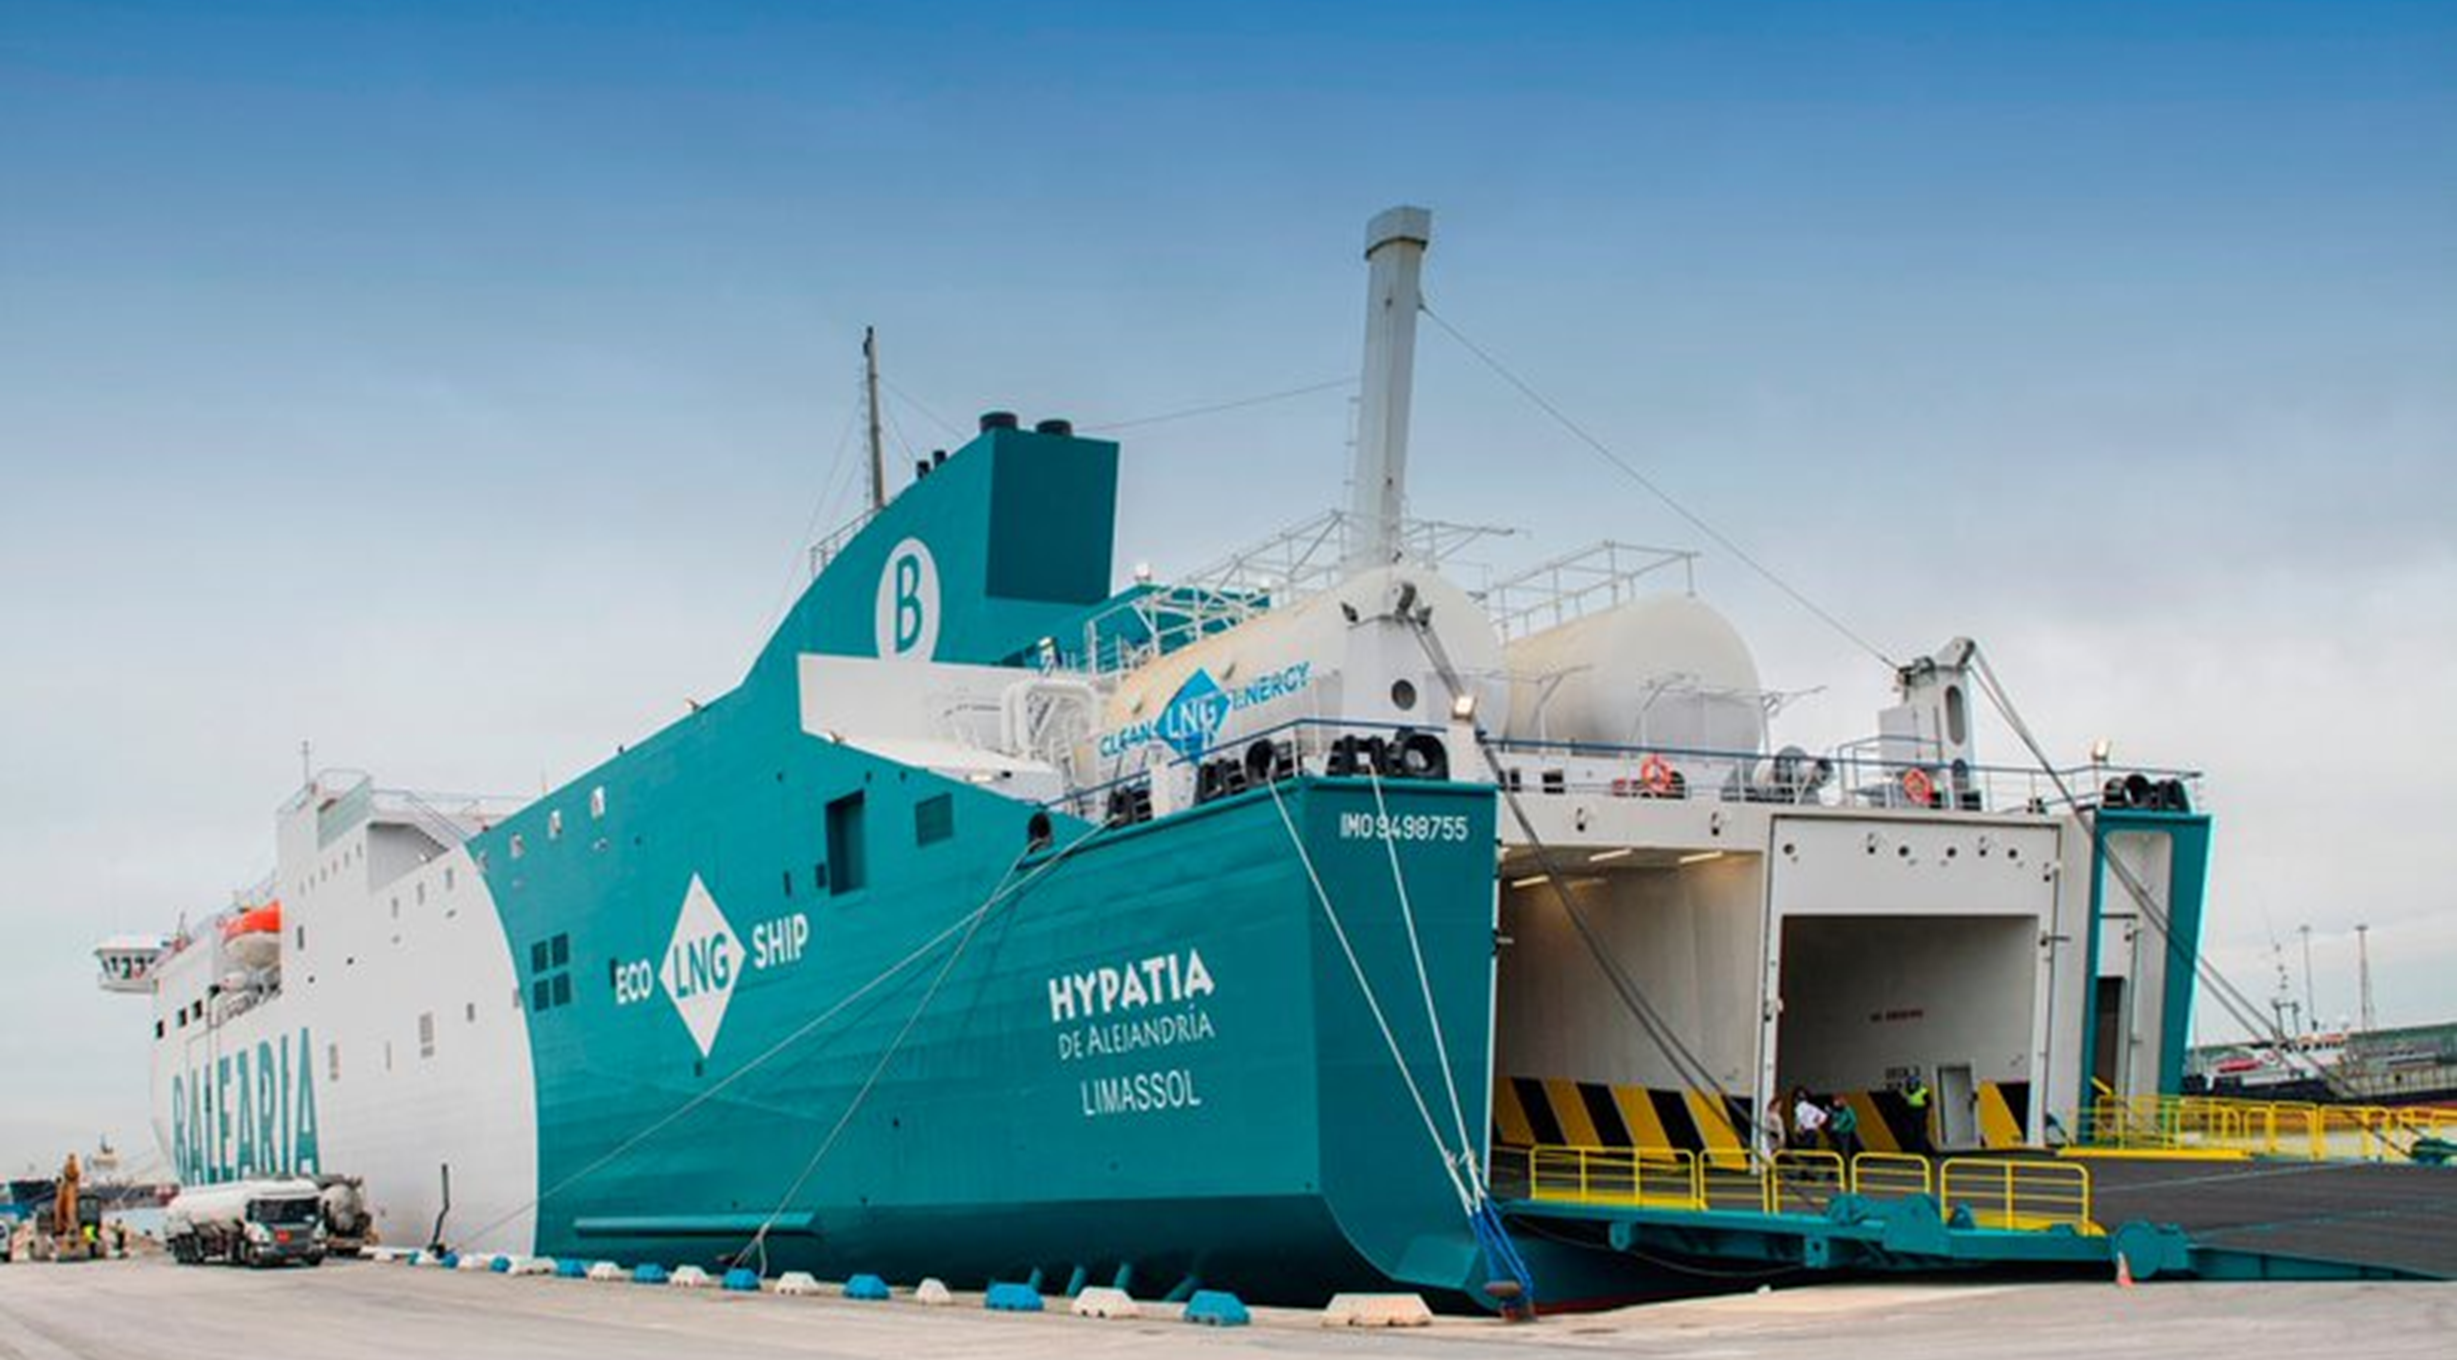 “Hypatia de Alexandria”, Balearia LNG-powered ferry, into service between Barcelona and Maiorca